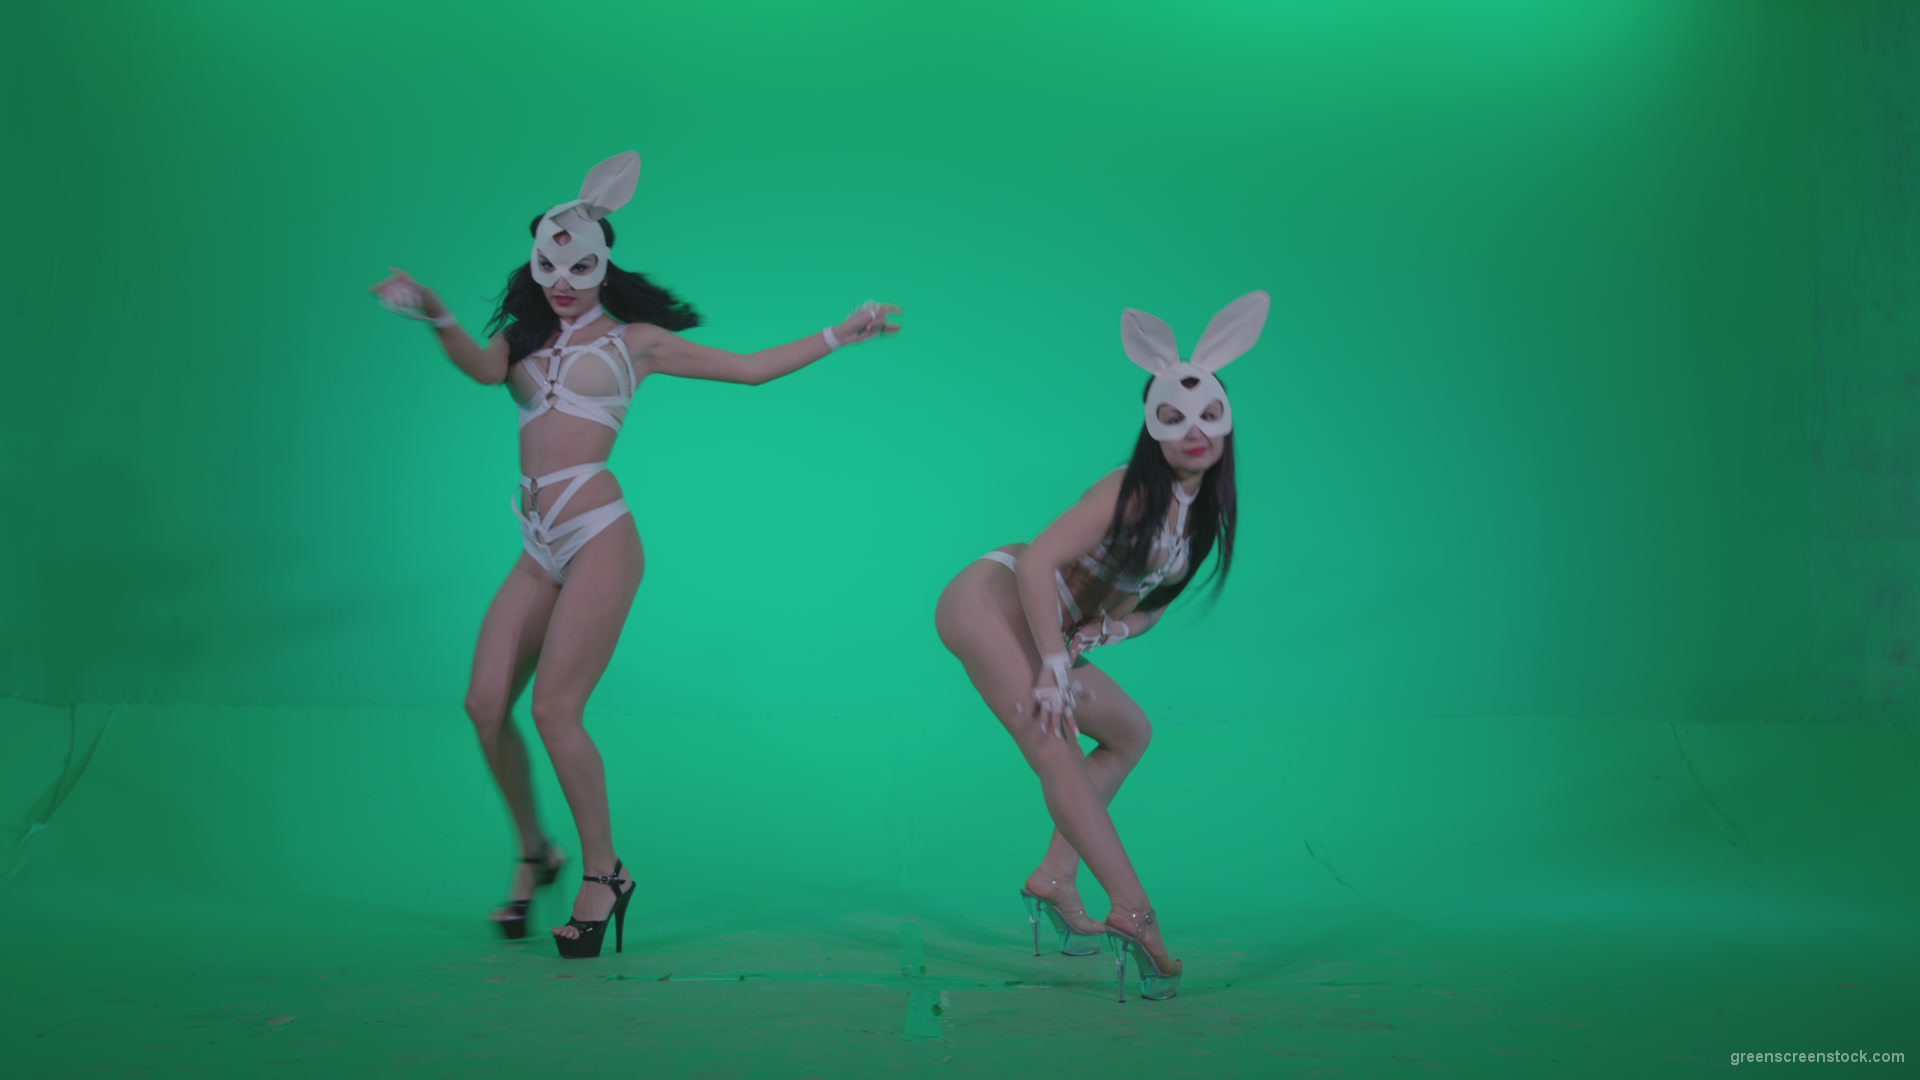 Go-go-Dancer-White-Rabbit-m1-Green-Screen-Video-Footage_005 Green Screen Stock